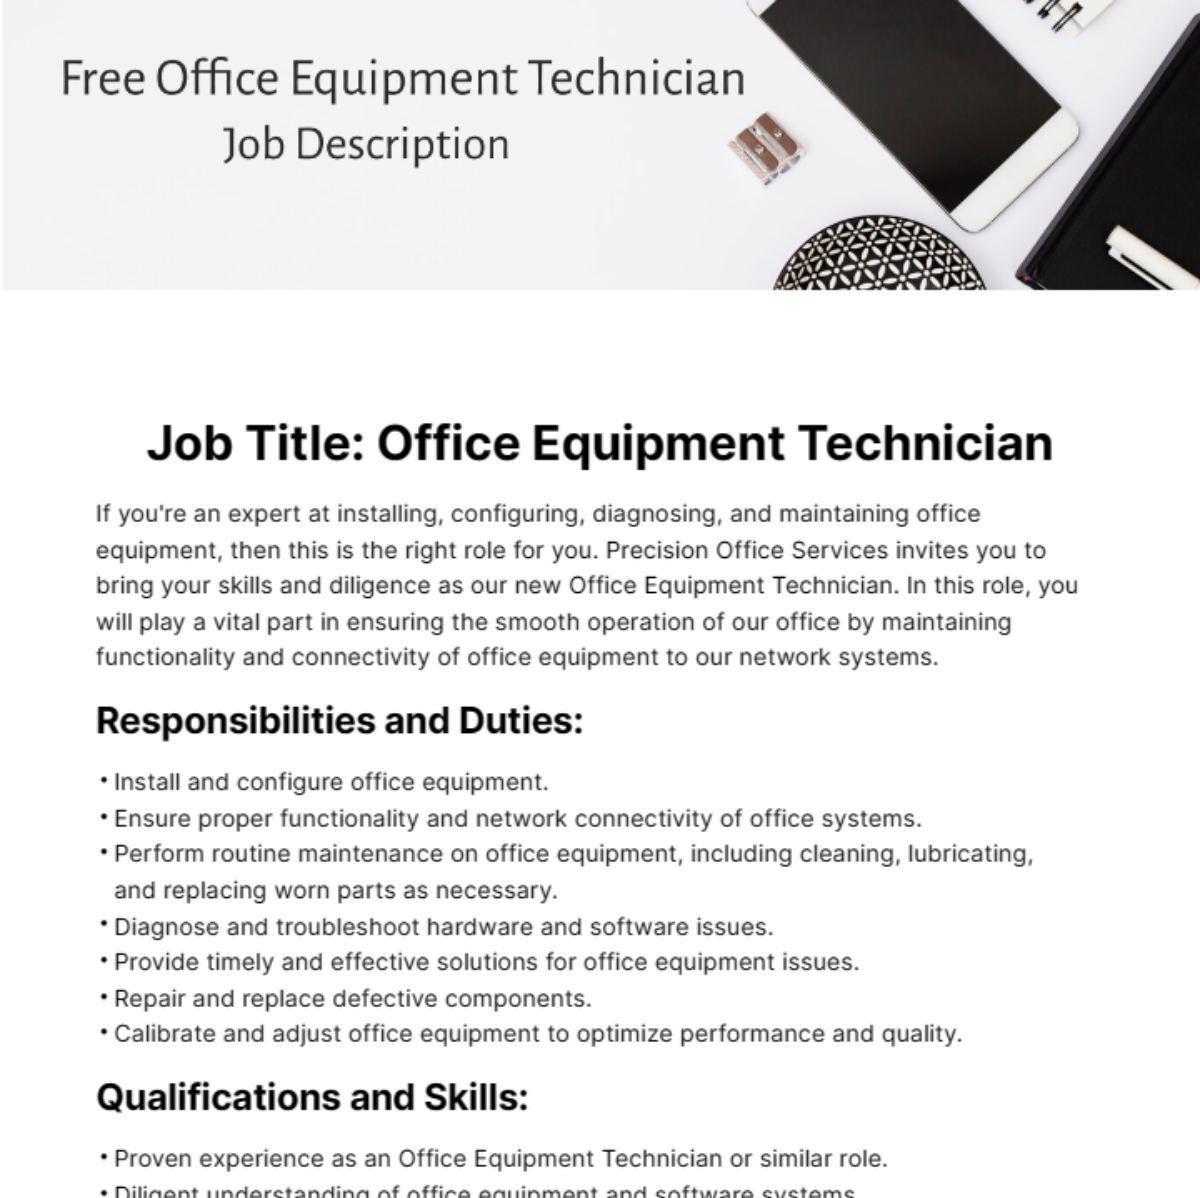 Free Office Equipment Technician Job Description Template